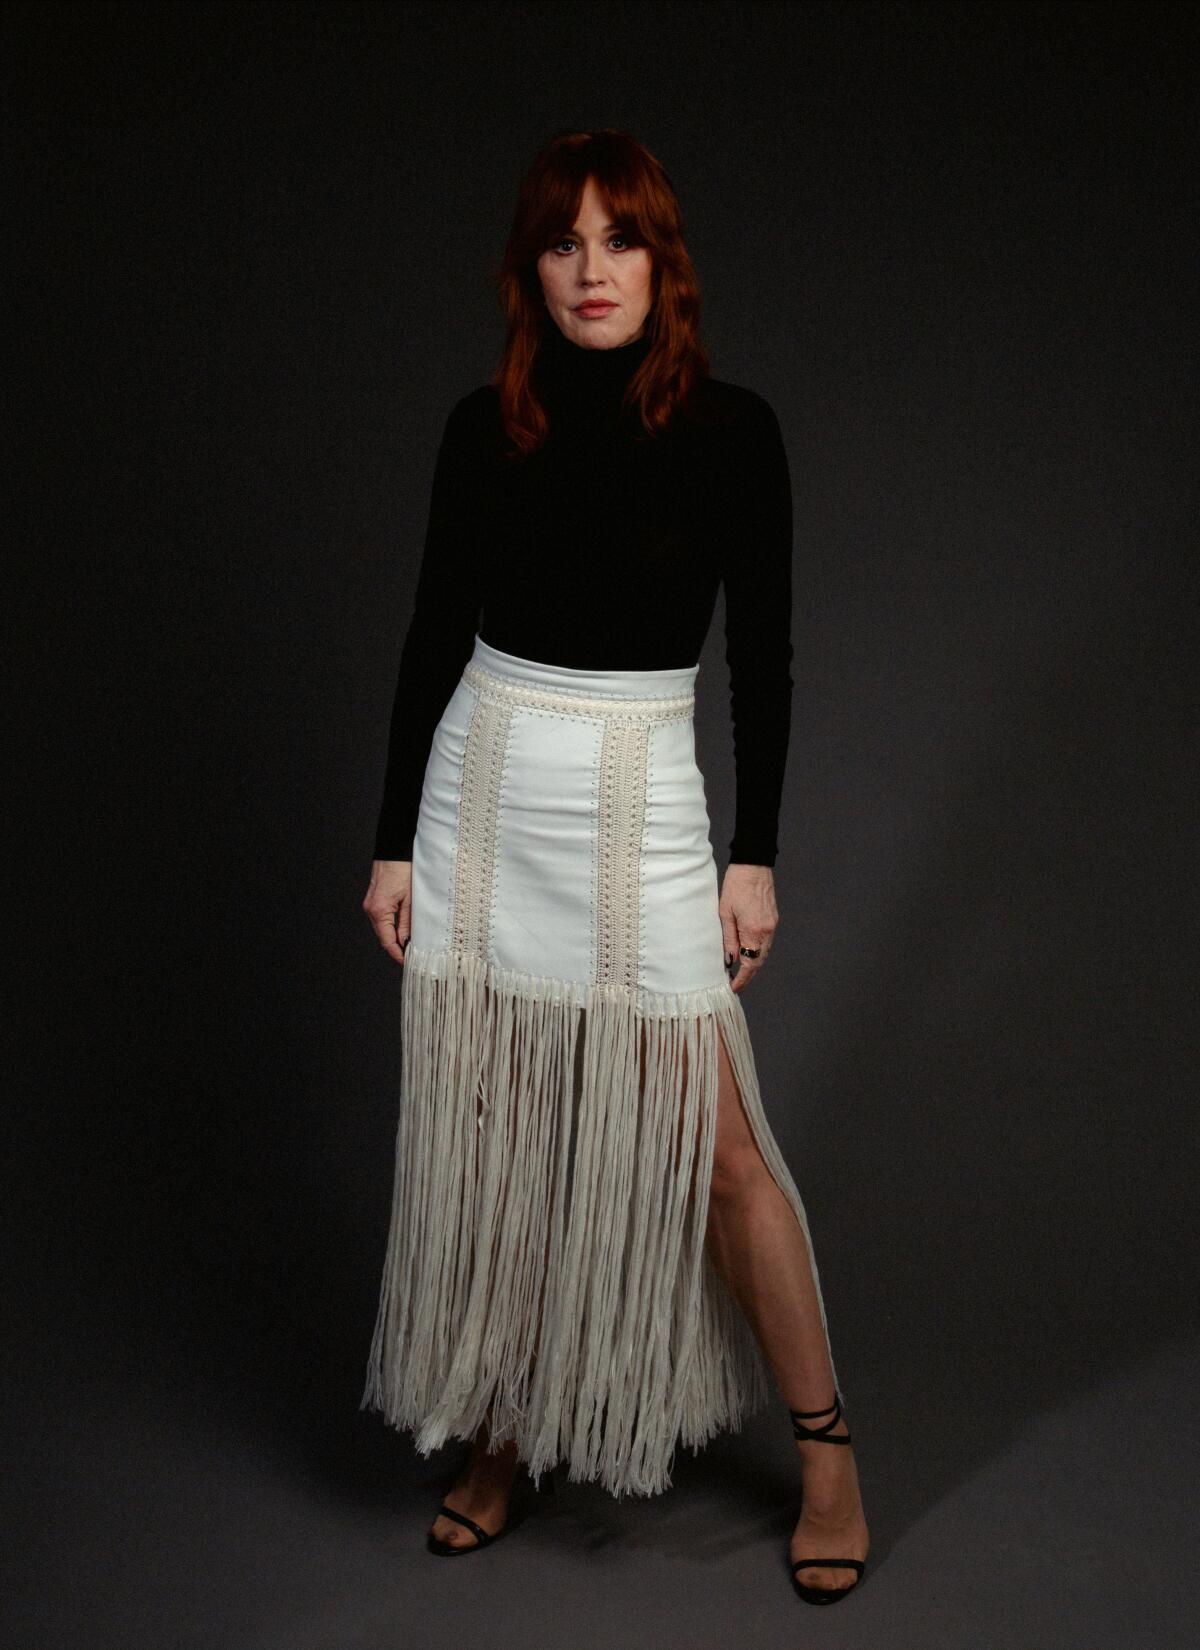 Molly Ringwald in black turtleneck and white skirt.